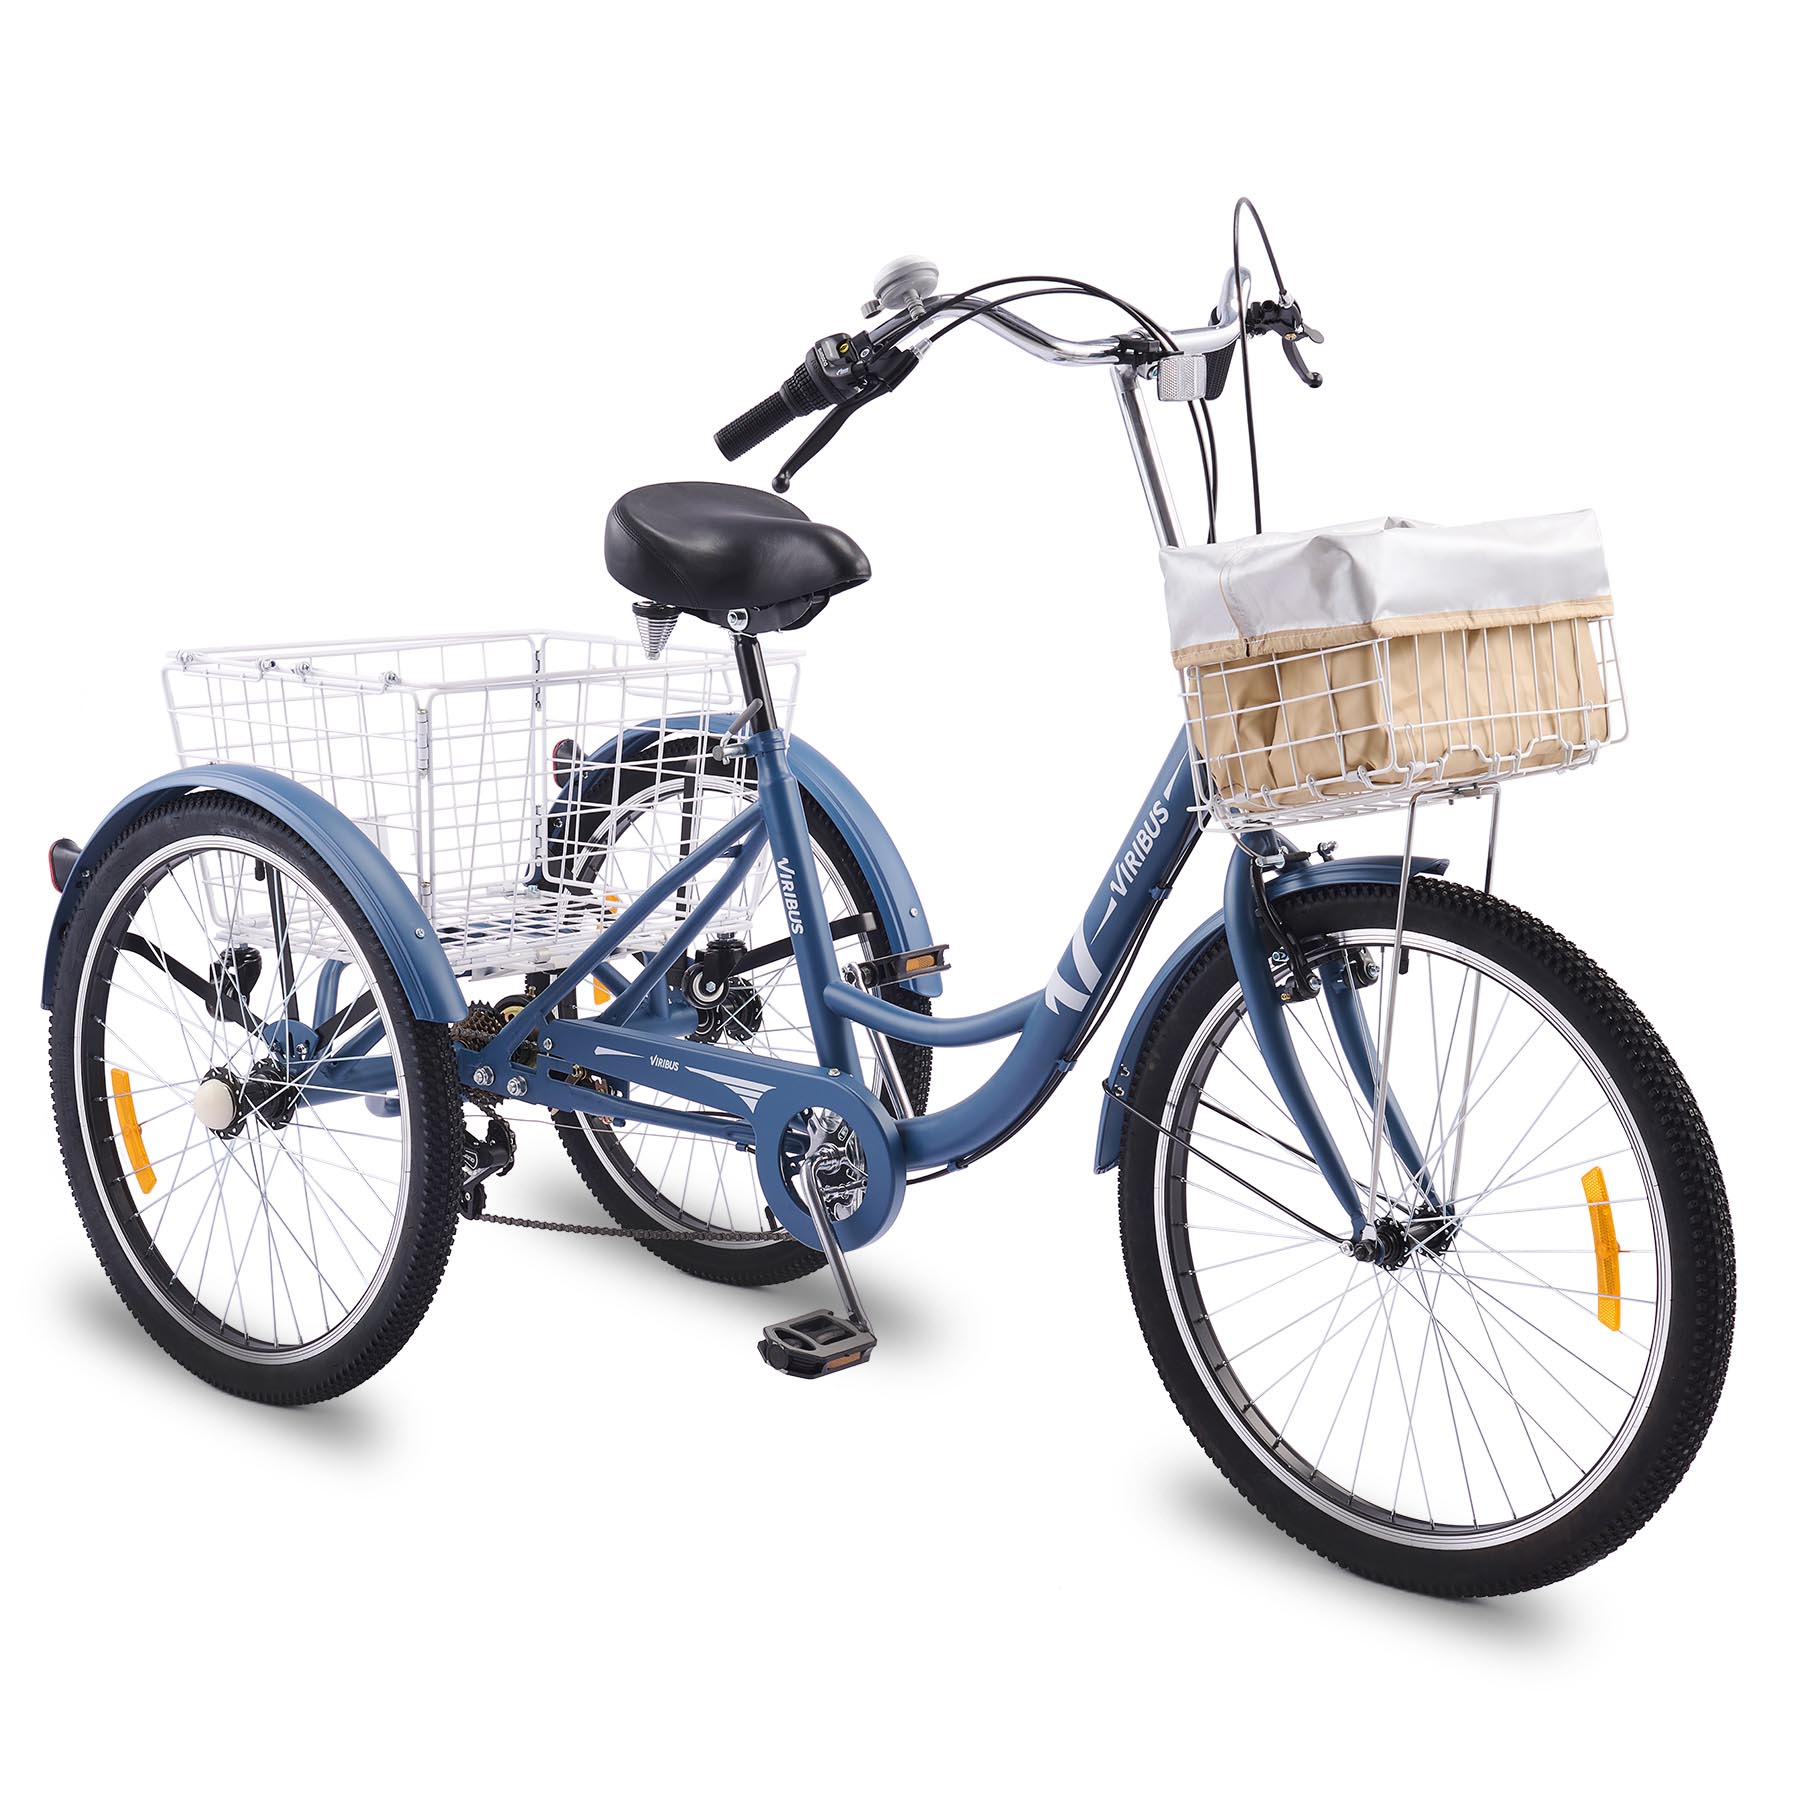  Viribus Best Adults Tricycle Three Wheel Bike for Women Men on Sale